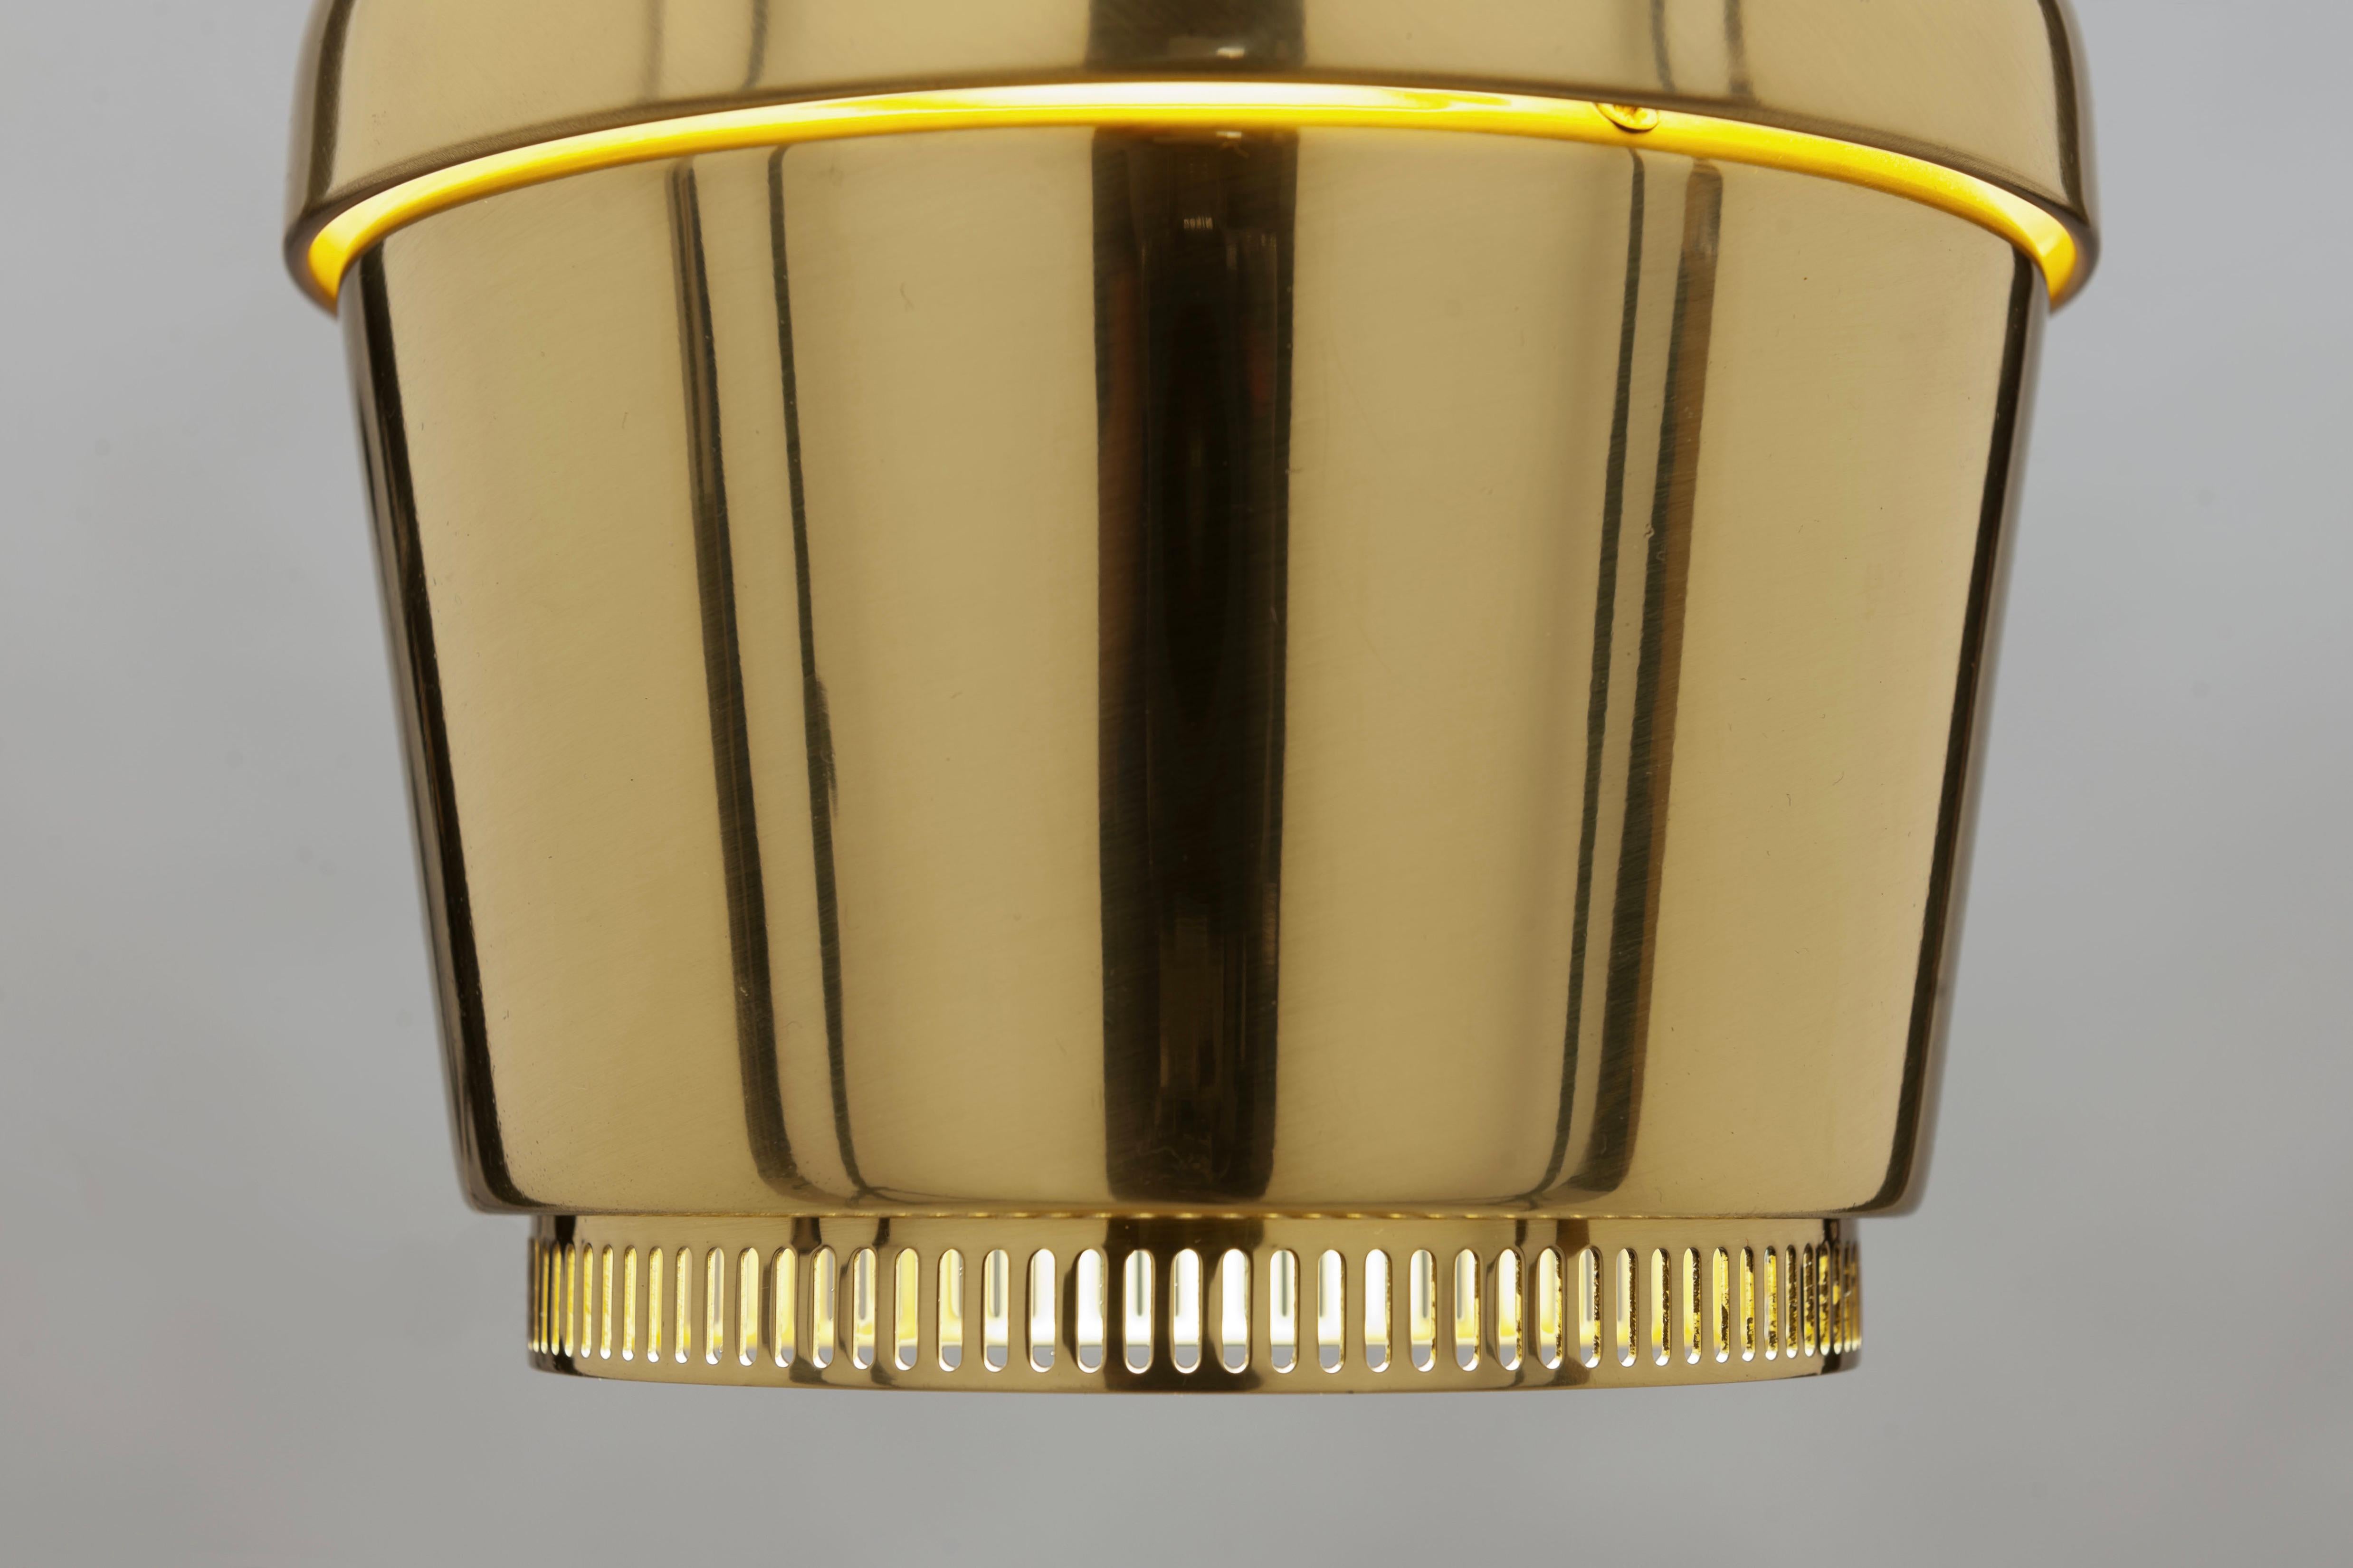 Messing-Anhänger „Kultakello“ Modell A 330 „Goldene Glocke“ von Alvar Aalto (Skandinavische Moderne) im Angebot